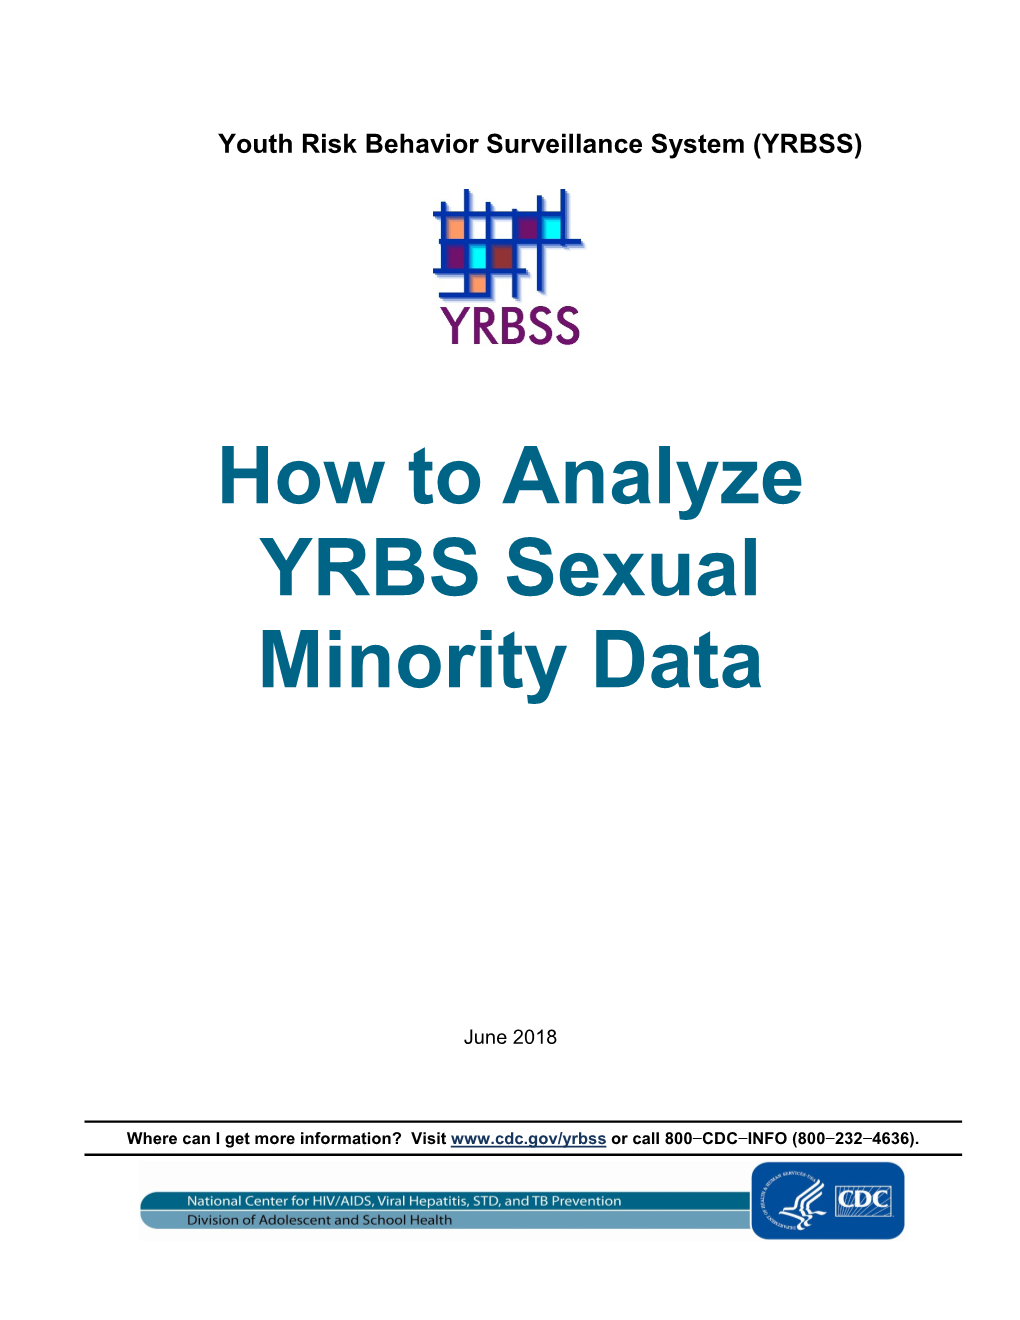 How to Analyze YRBS Sexual Minority Data